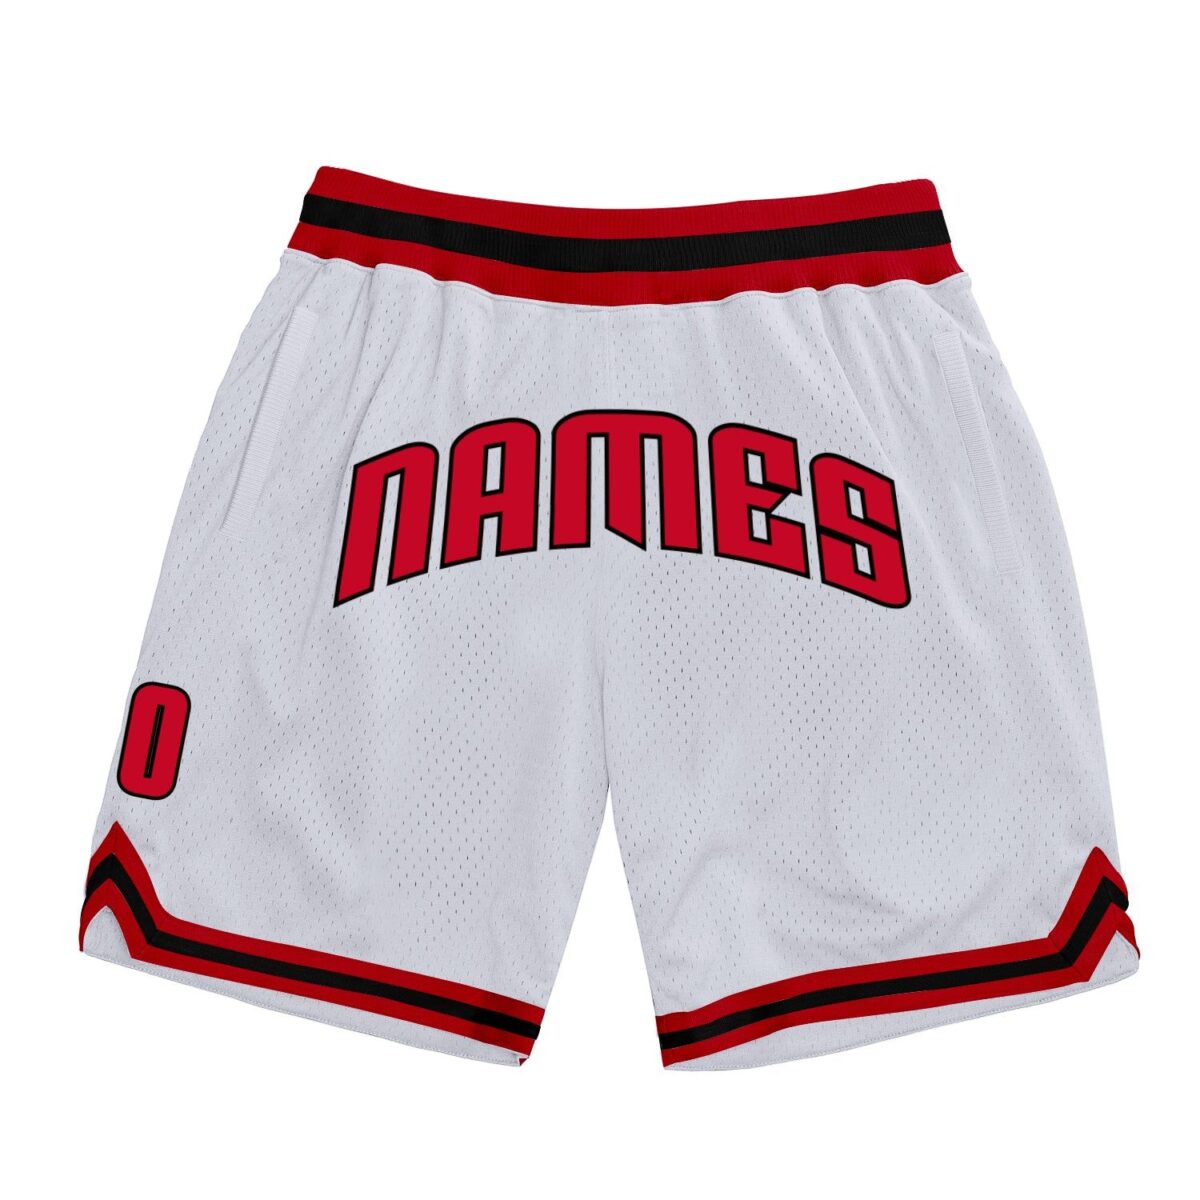 White Red Basketball Shorts 1